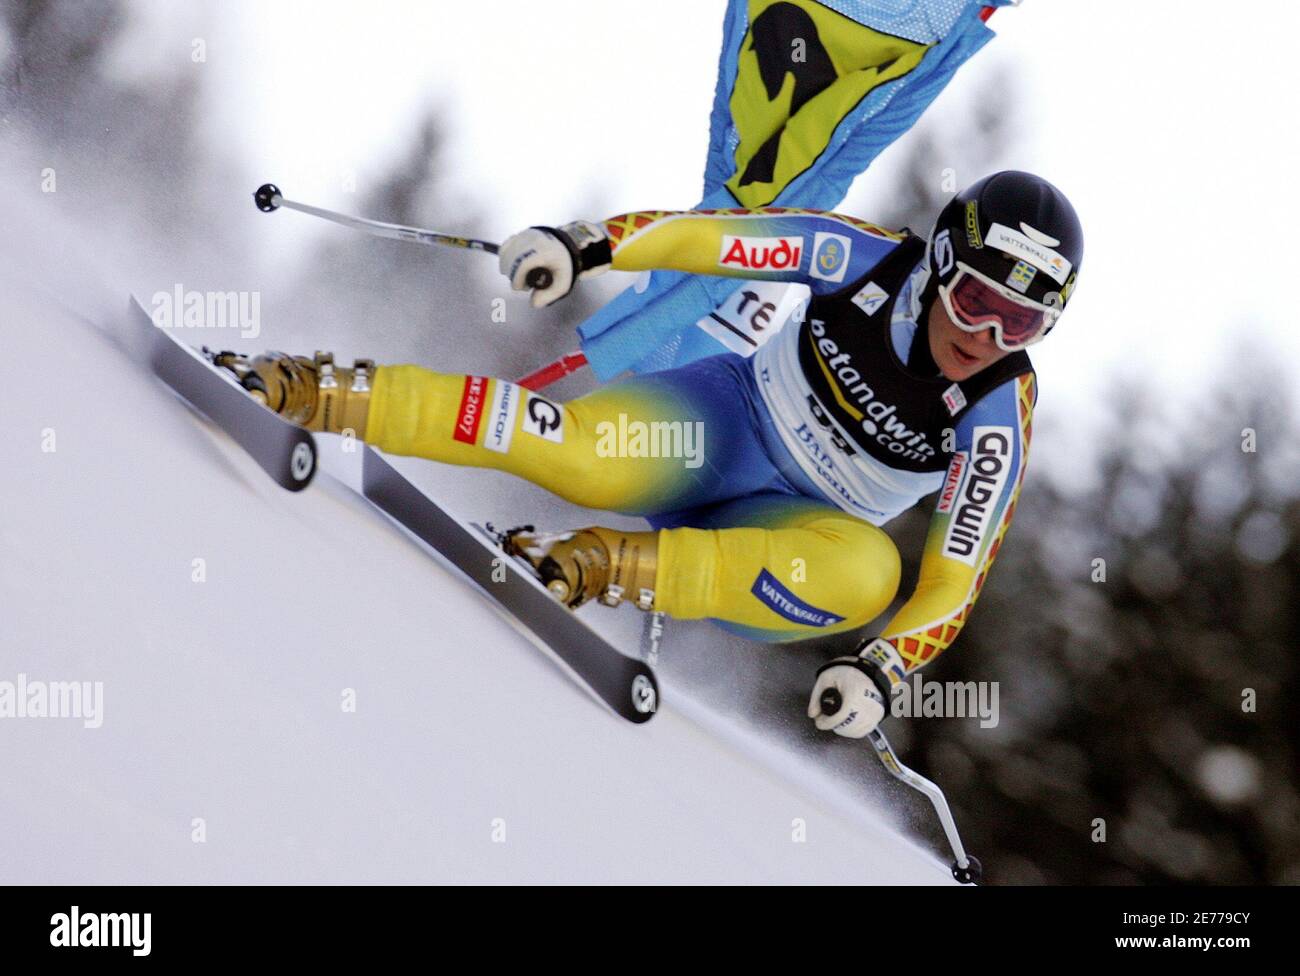 Nike Bent of Sweden speeds down during women's Alpine Ski World Cup  downhill training in Bad Kleinkirchheim January 12, 2006. Sylviane Berthod  of Switzerland clocked best time in one minute 38.09 seconds